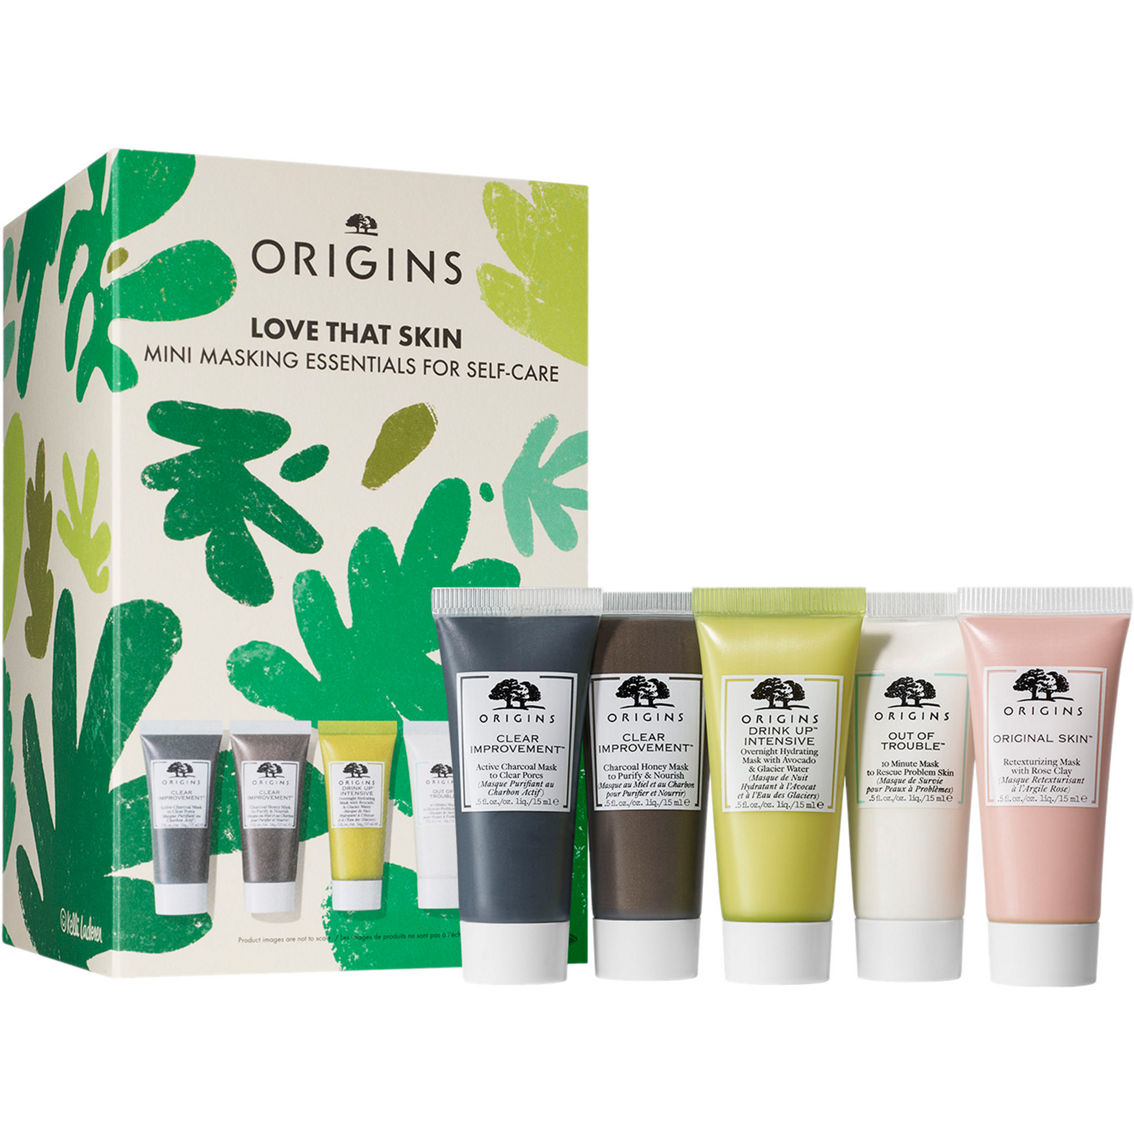 Origins Love That Skin Mini Masking Essentials for Self-Care 5-pc. Set - Image 2 of 3